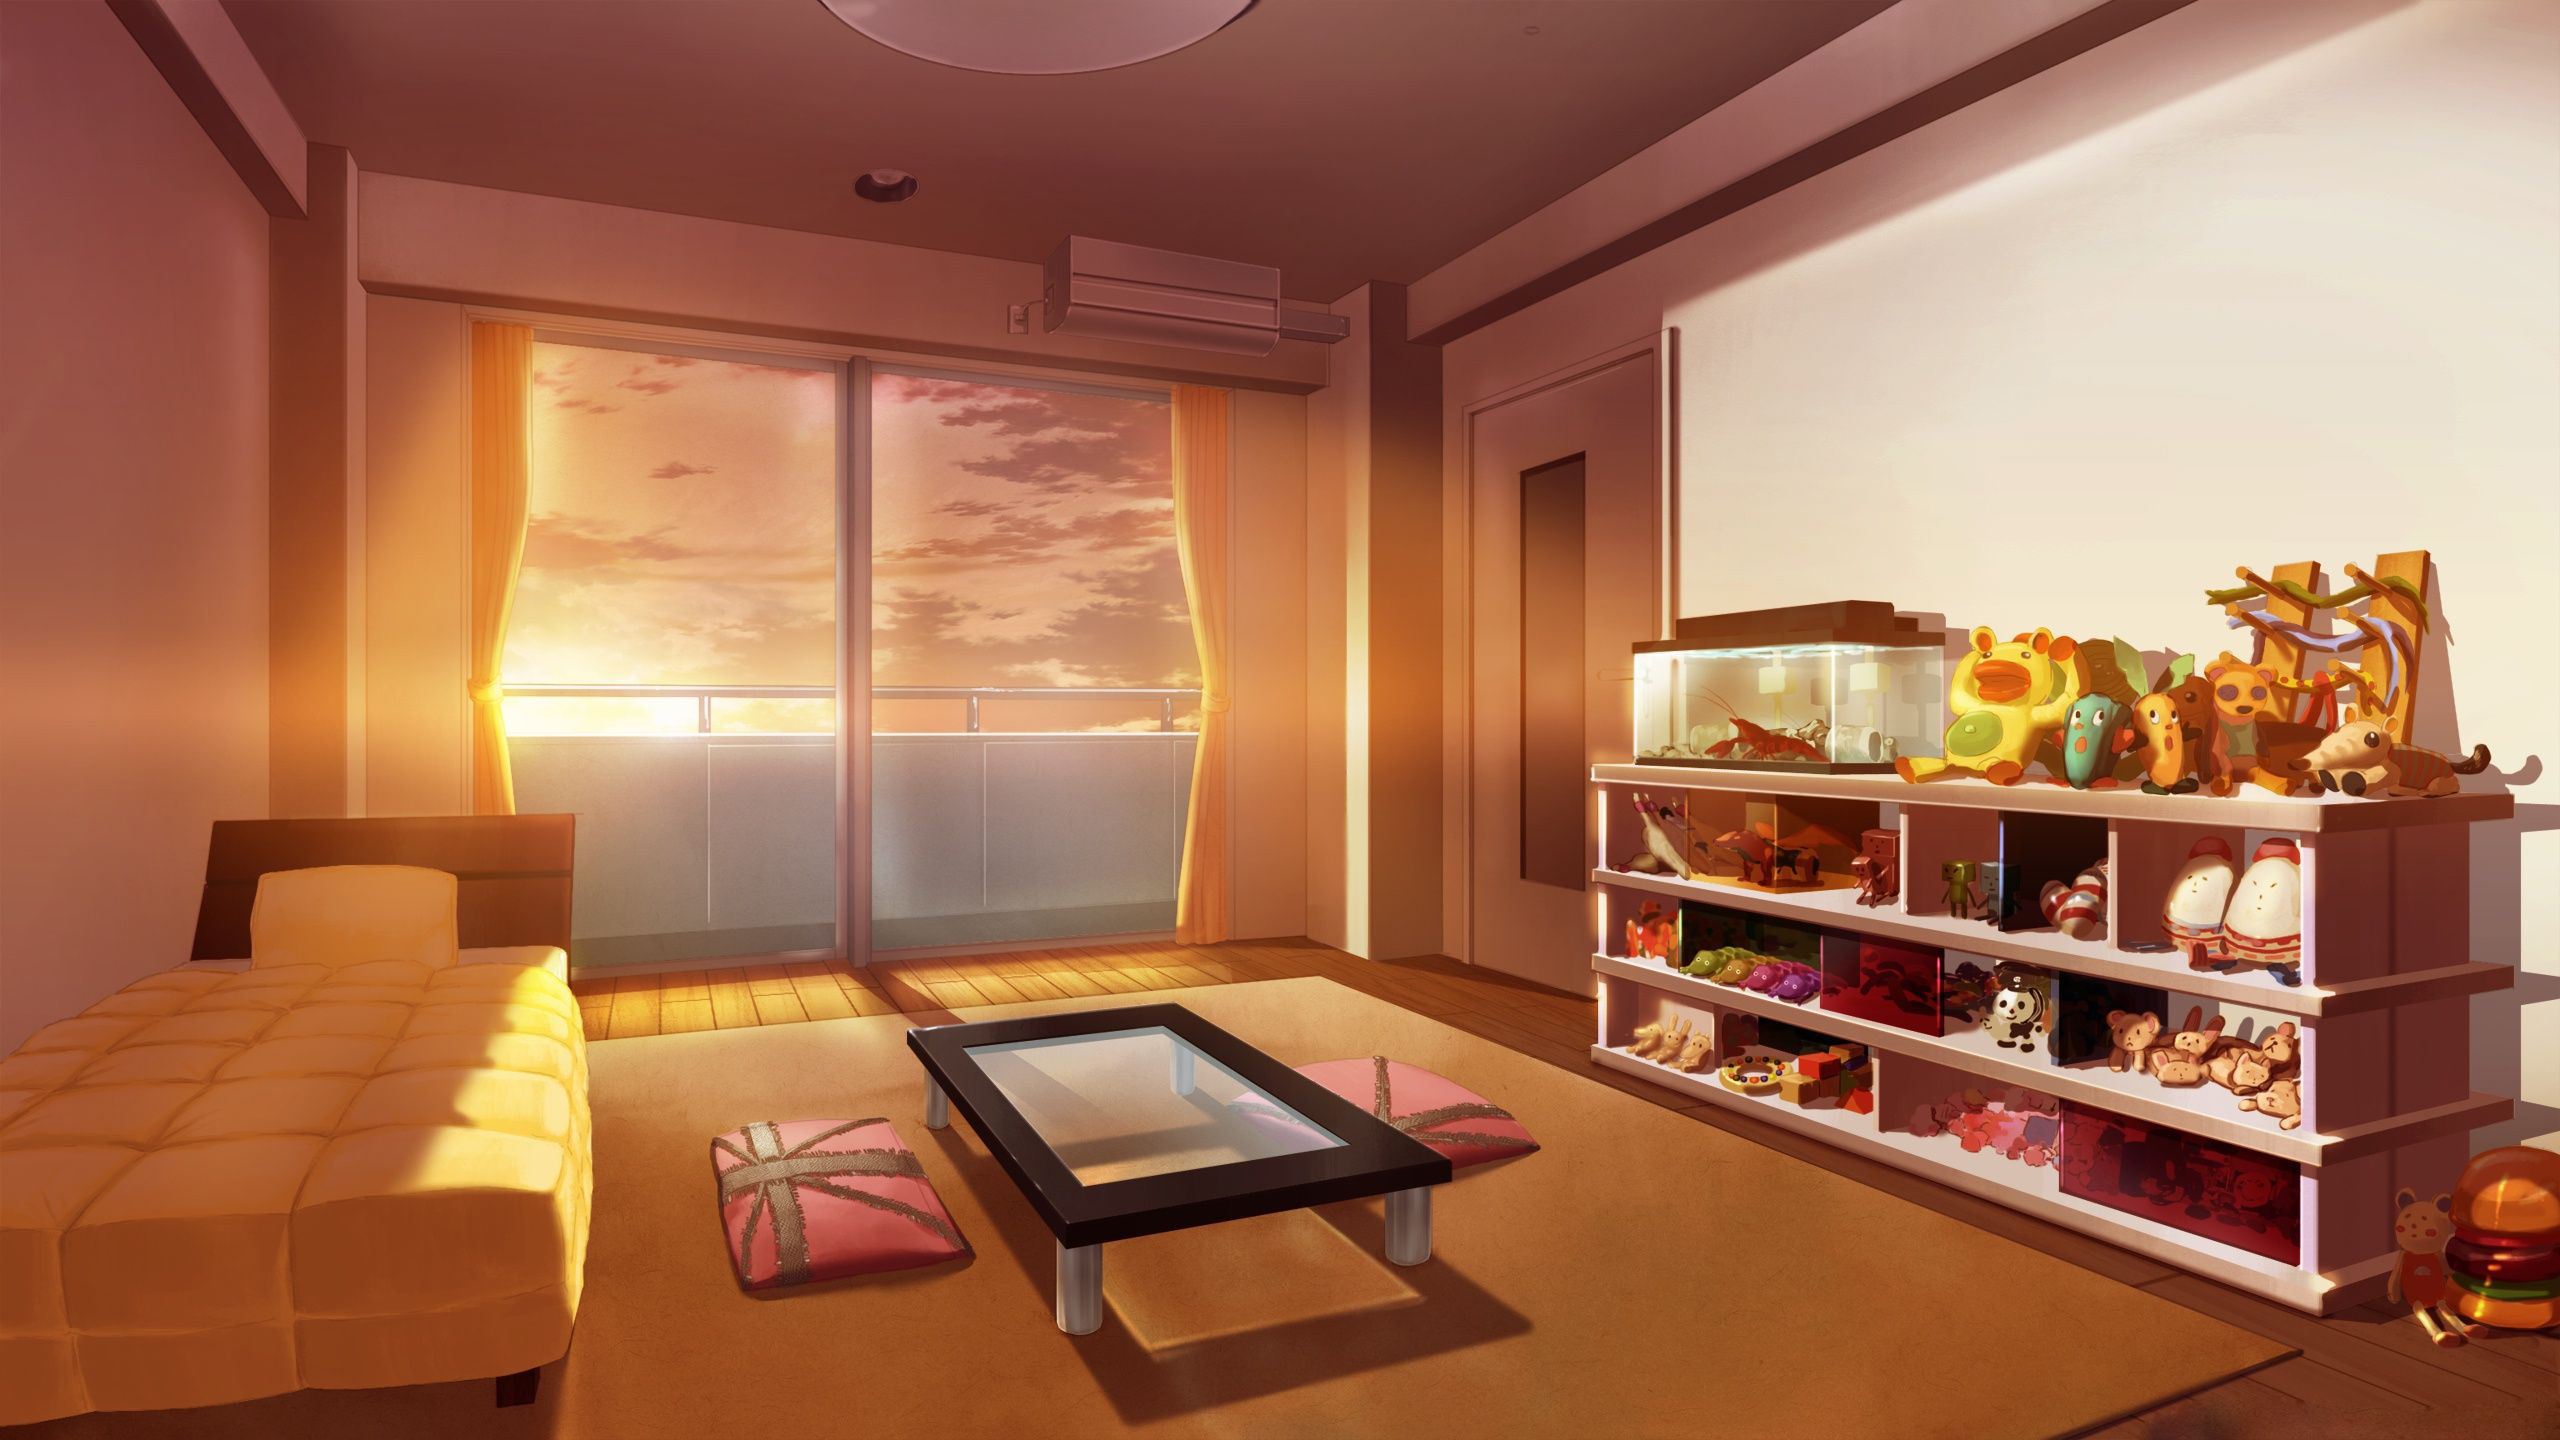 Anime Background Living Room by Bakhtiar93tiar on DeviantArt